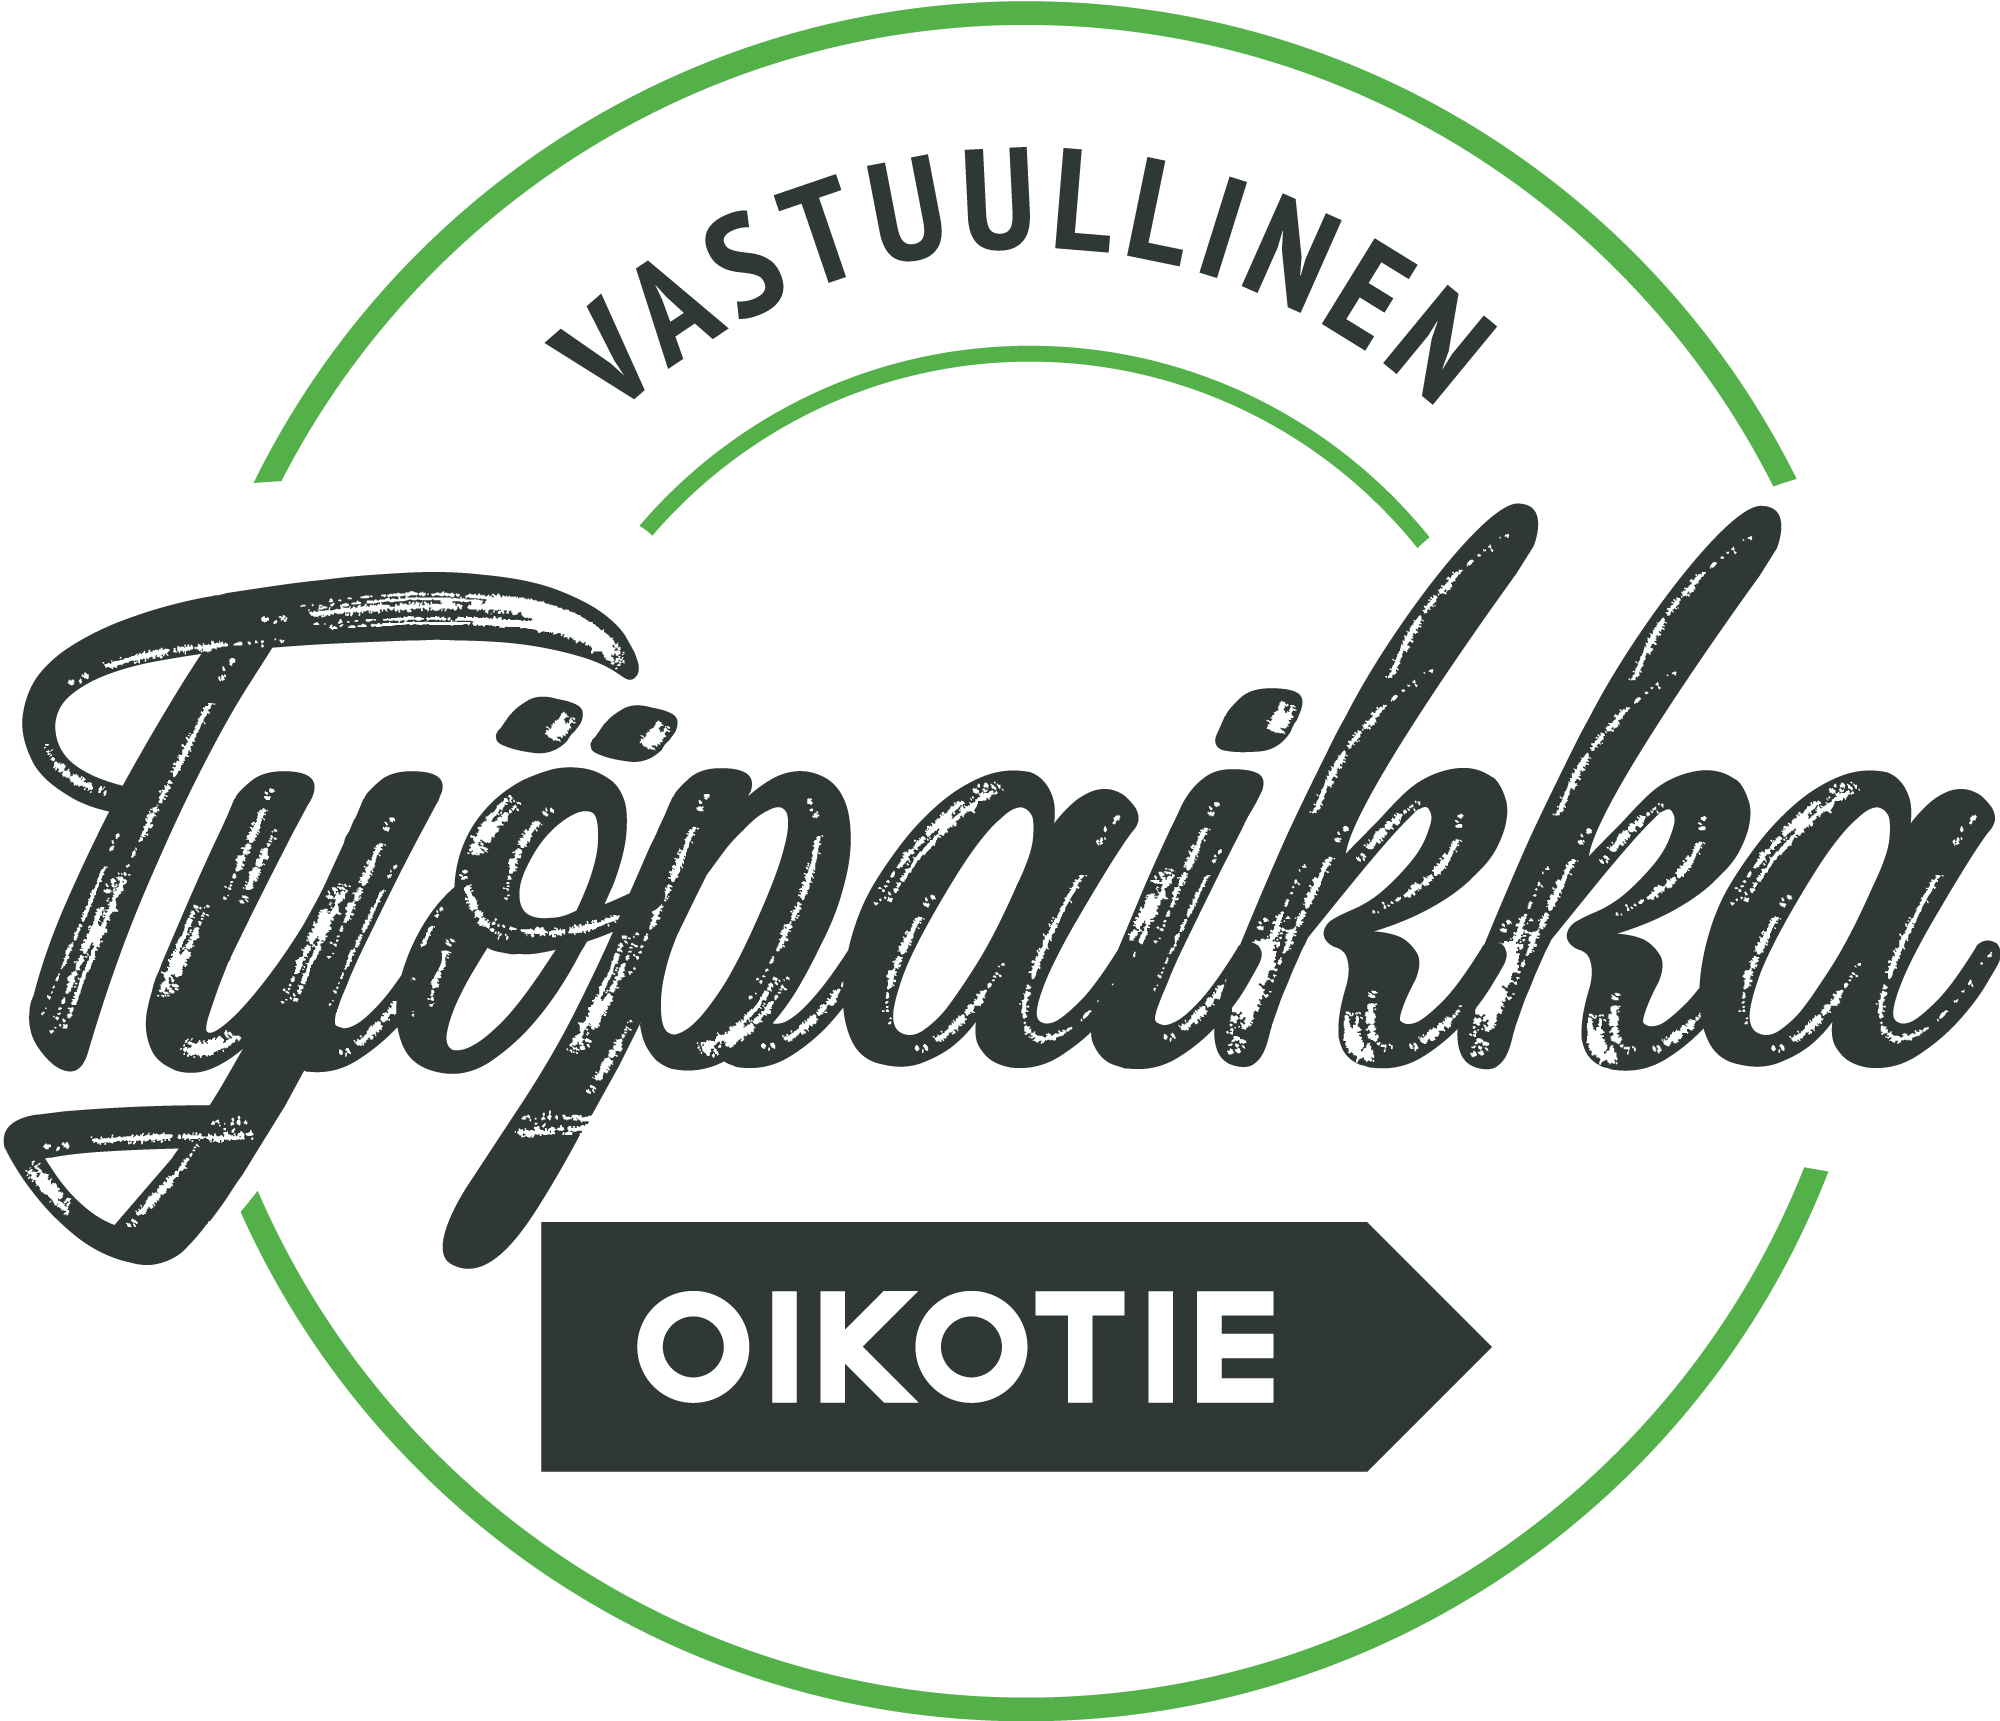 Tampereen kaupunki - Responsible workplace